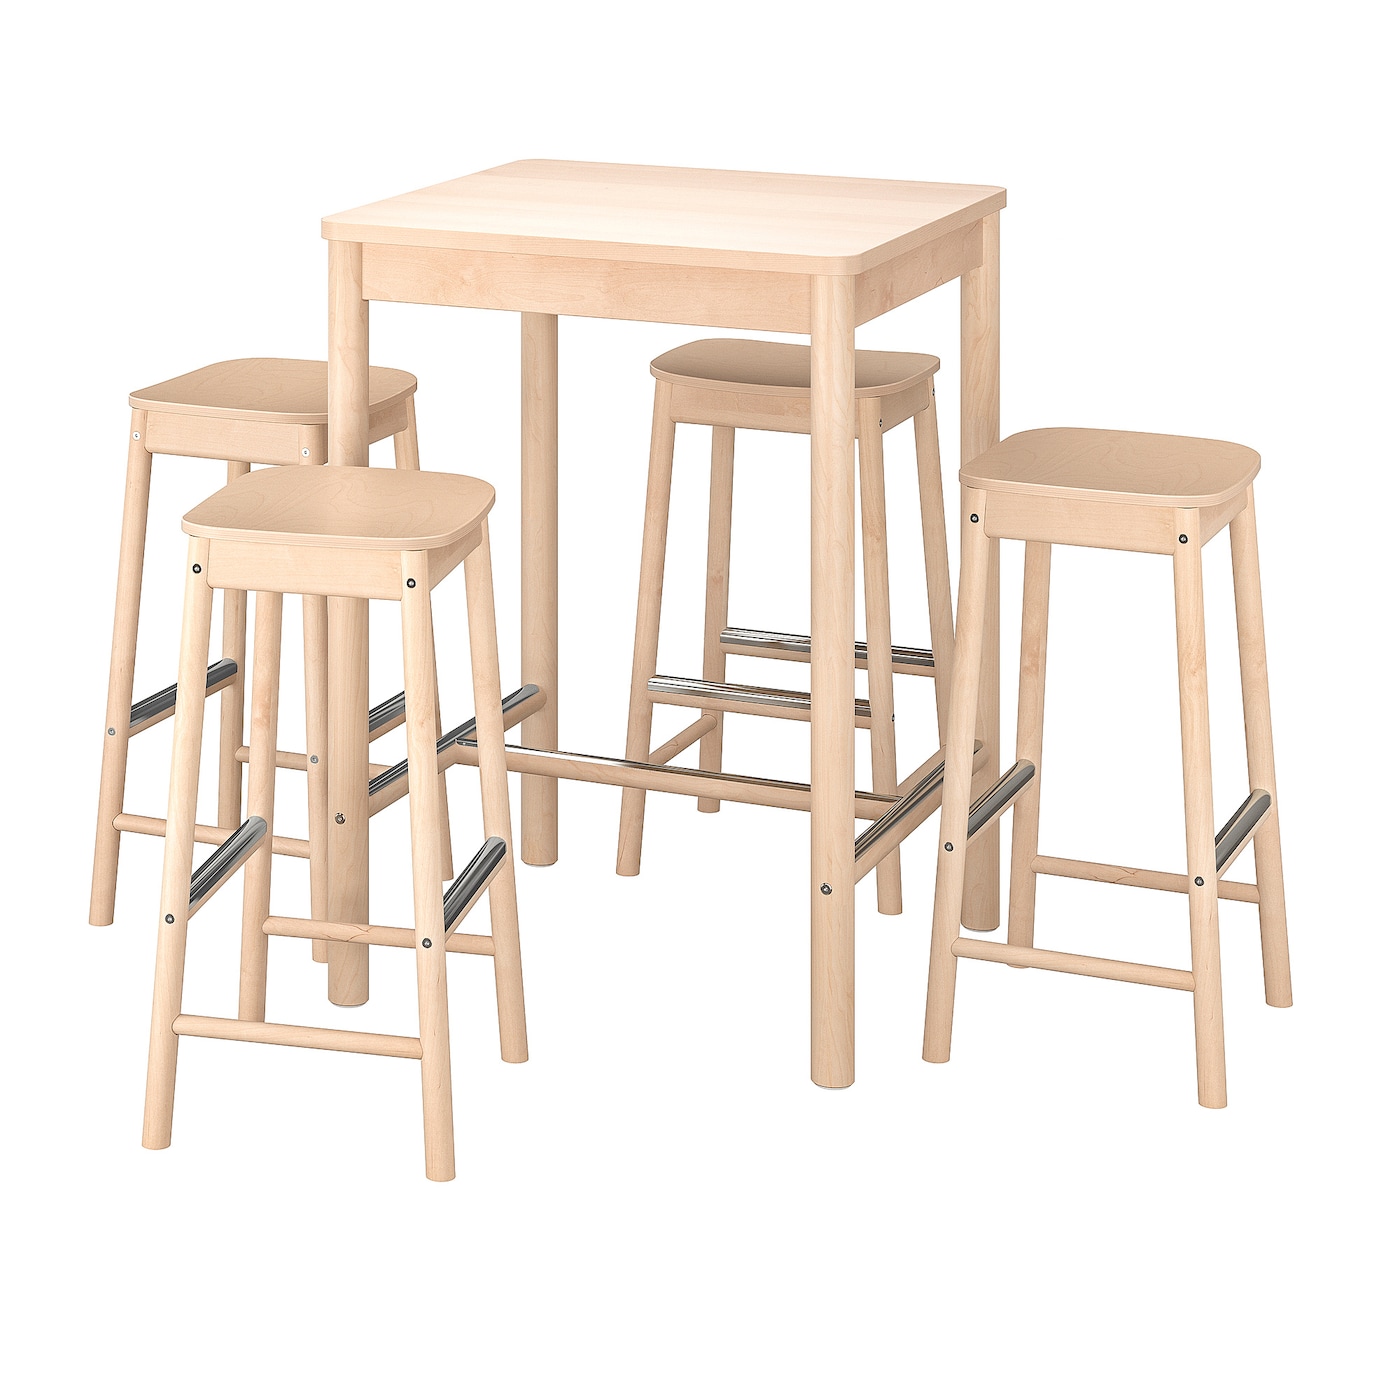 RÖNNINGE / RÖNNINGE Барний стіл + 4 барних стільця - береза / береза